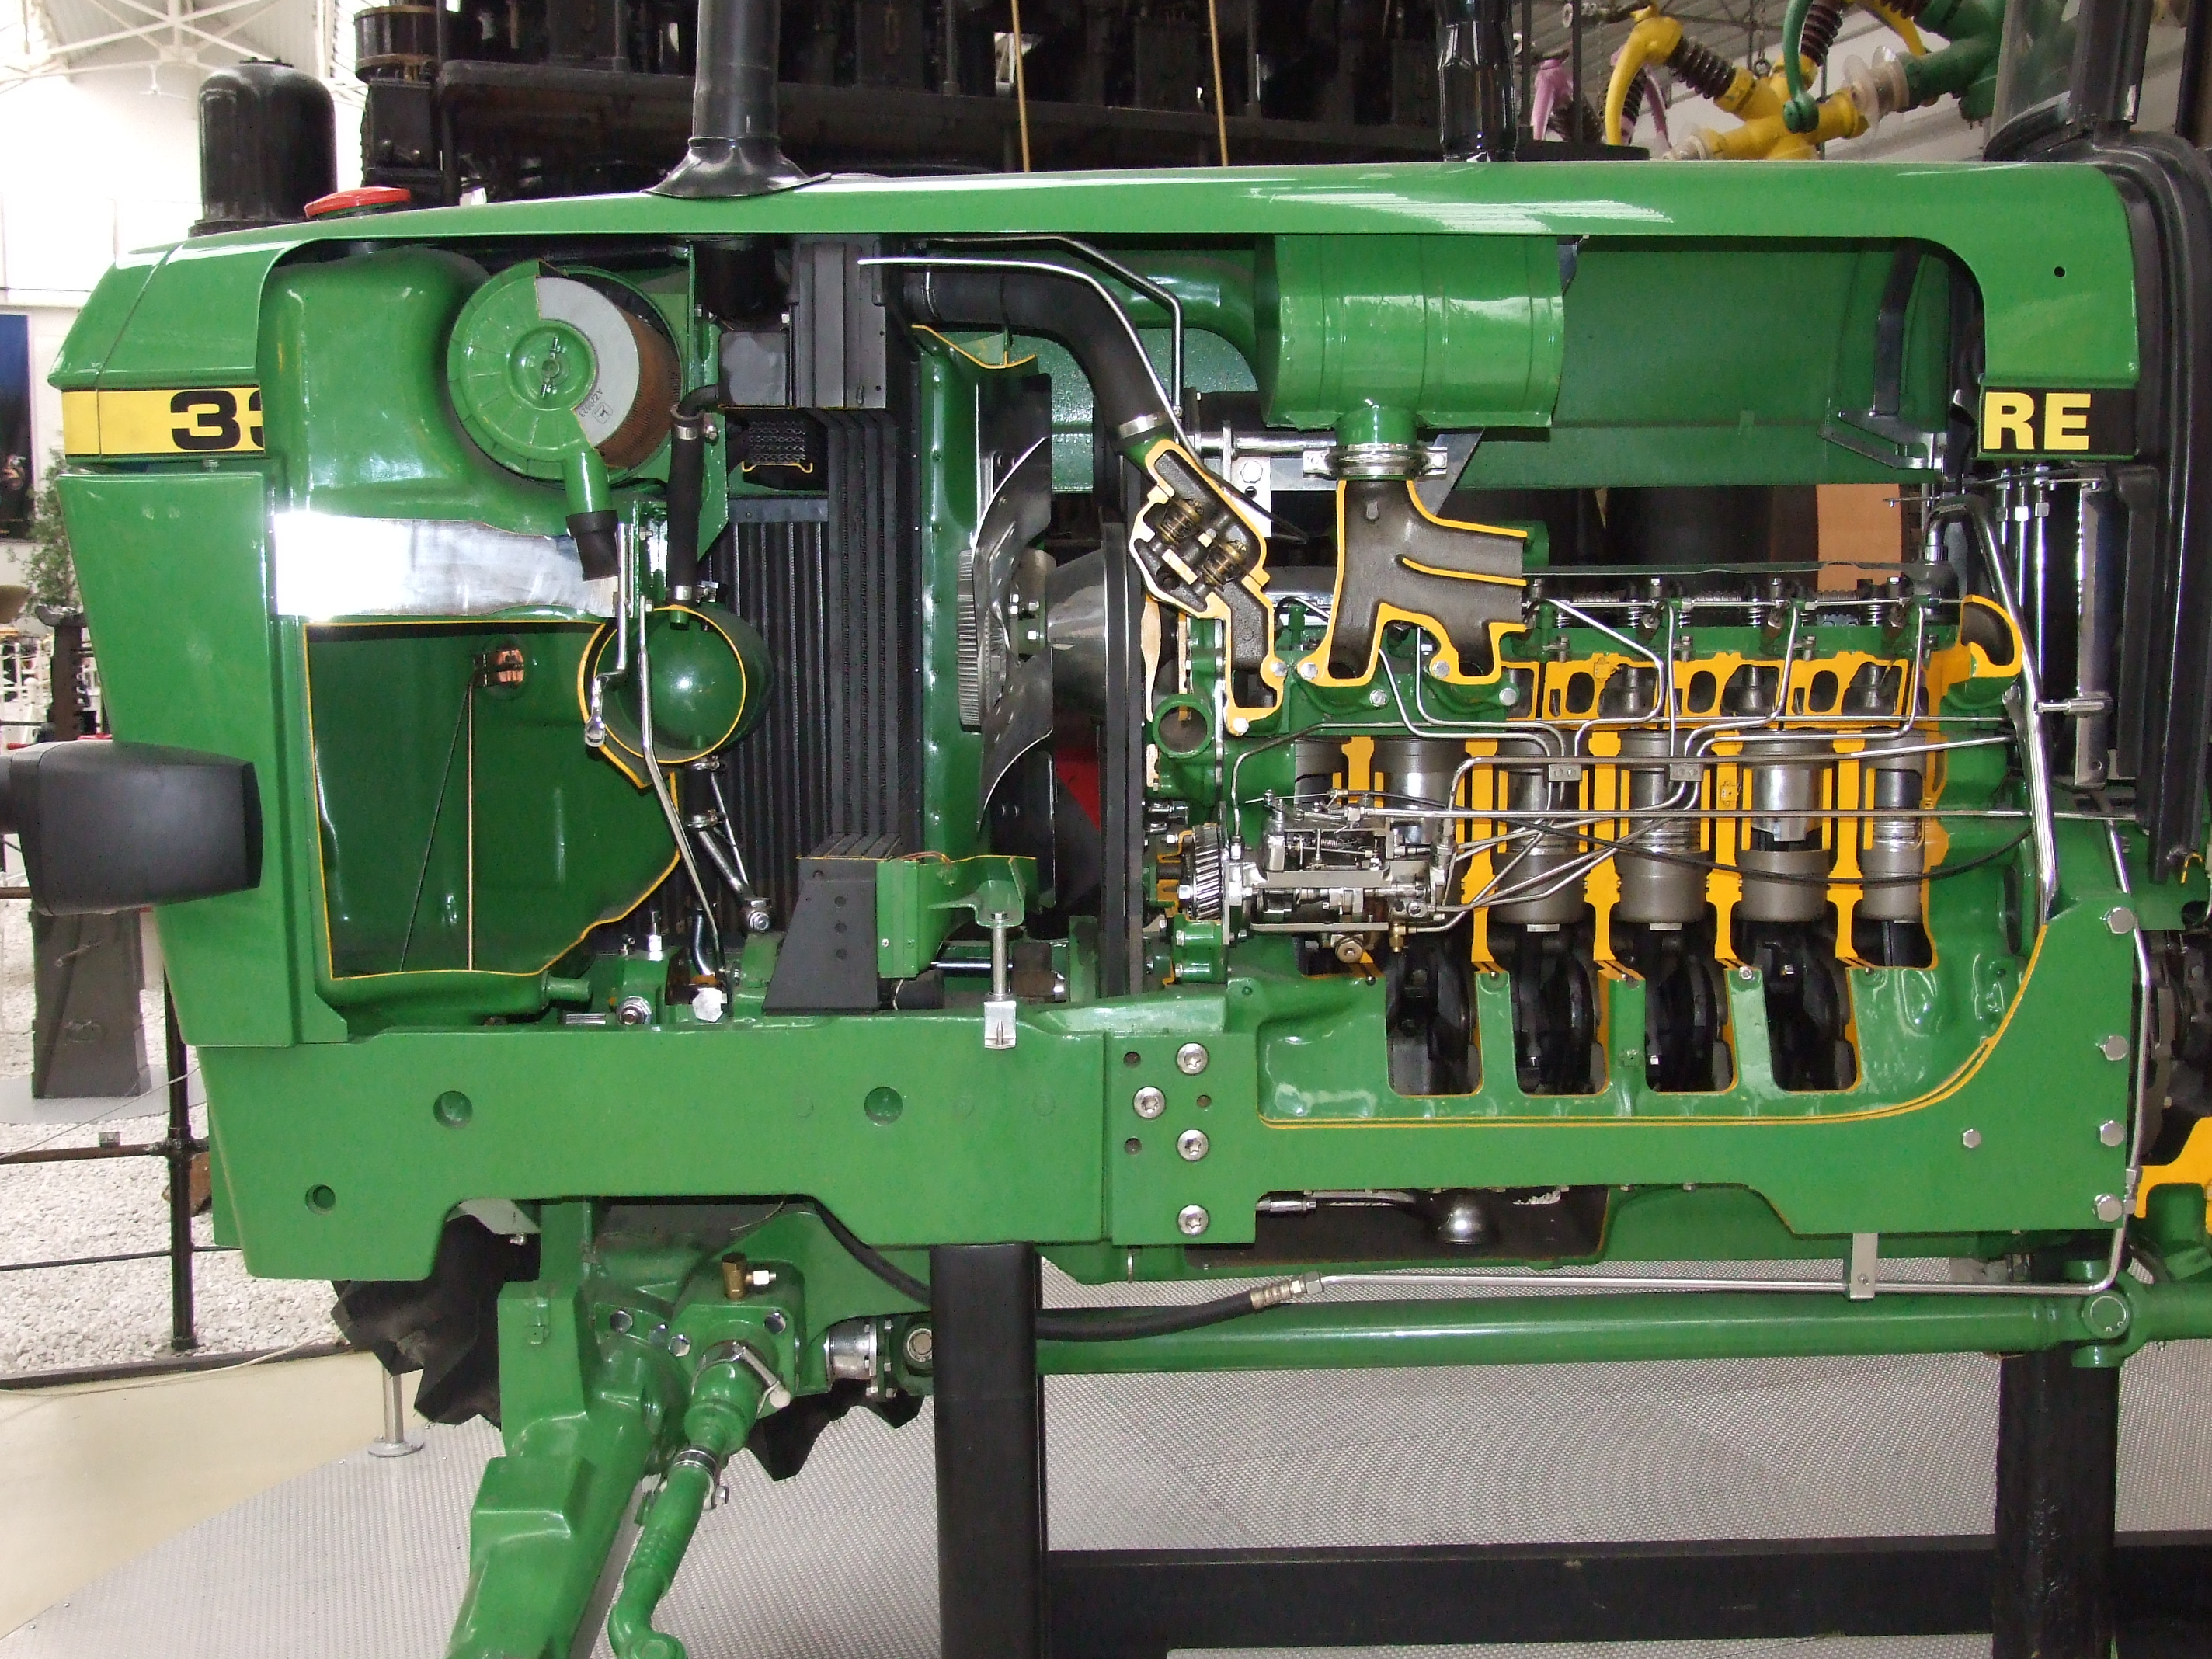 File:John Deere 3350 tractor cut engine.JPG - Wikimedia Commons